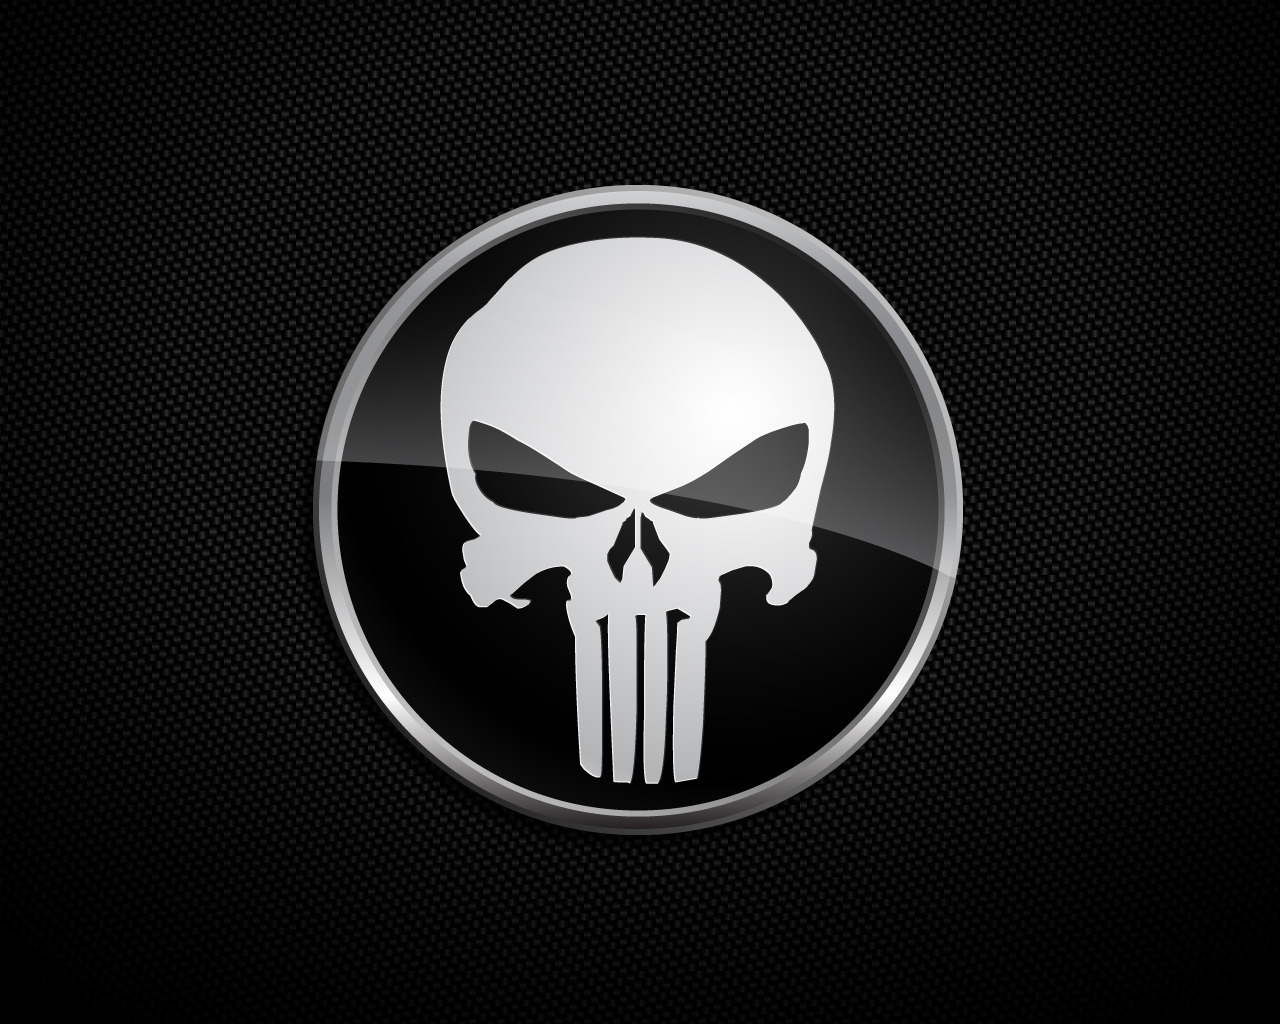 The Punisher Skull Logo HD Wallpaper Image To